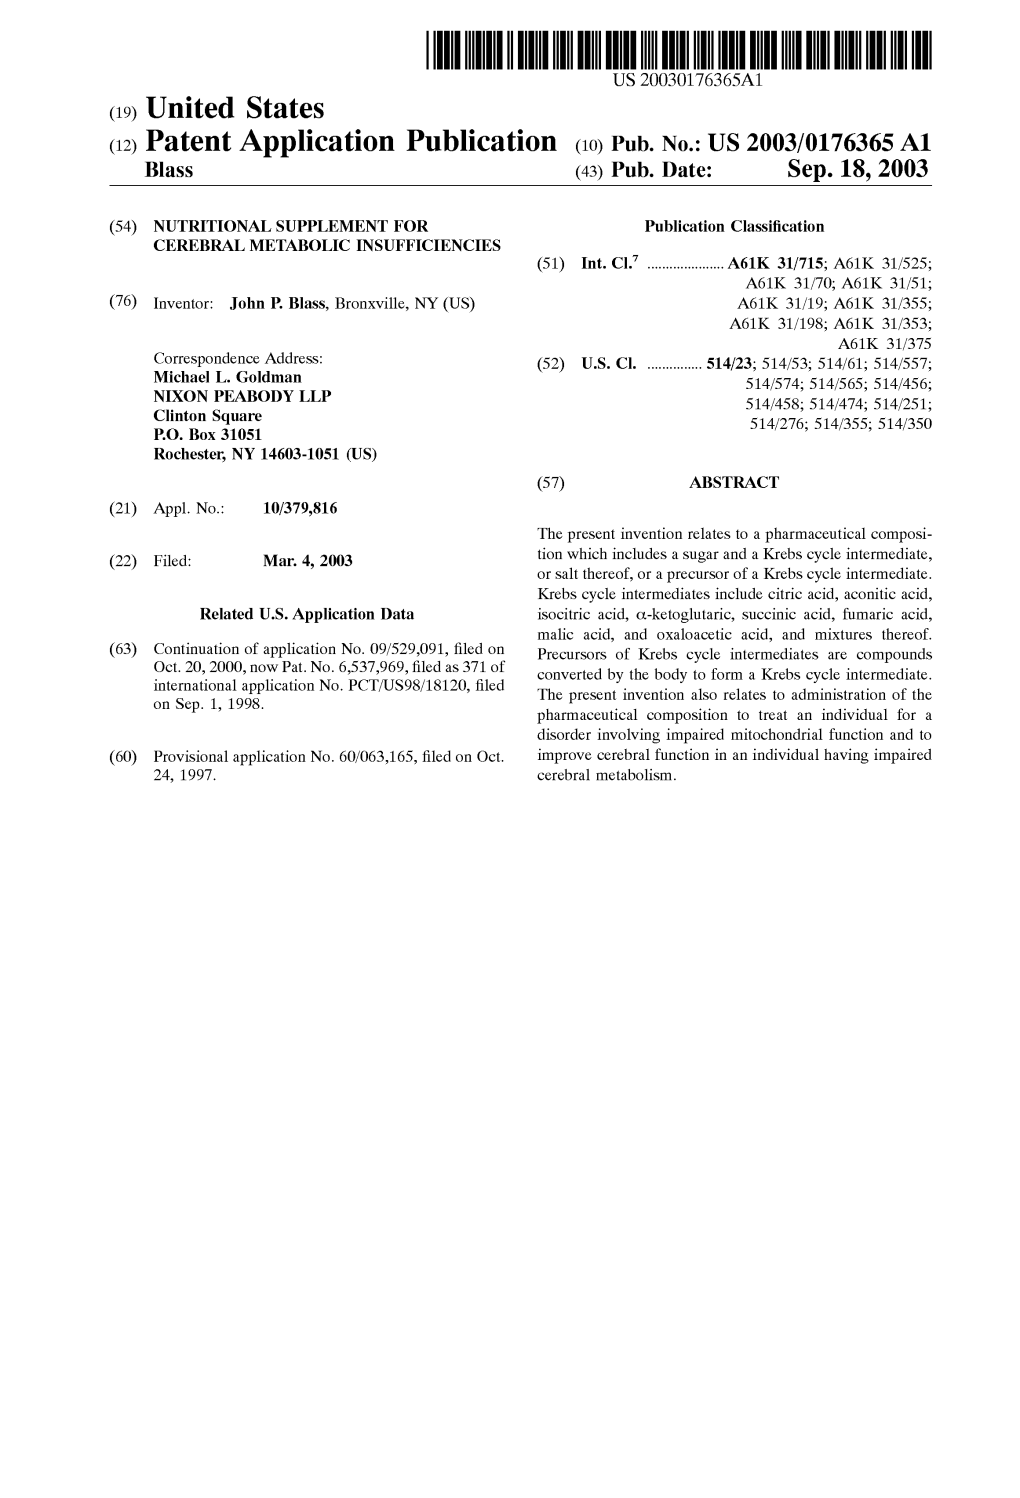 (12) Patent Application Publication (10) Pub. No.: US 2003/0176365A1 Blass (43) Pub